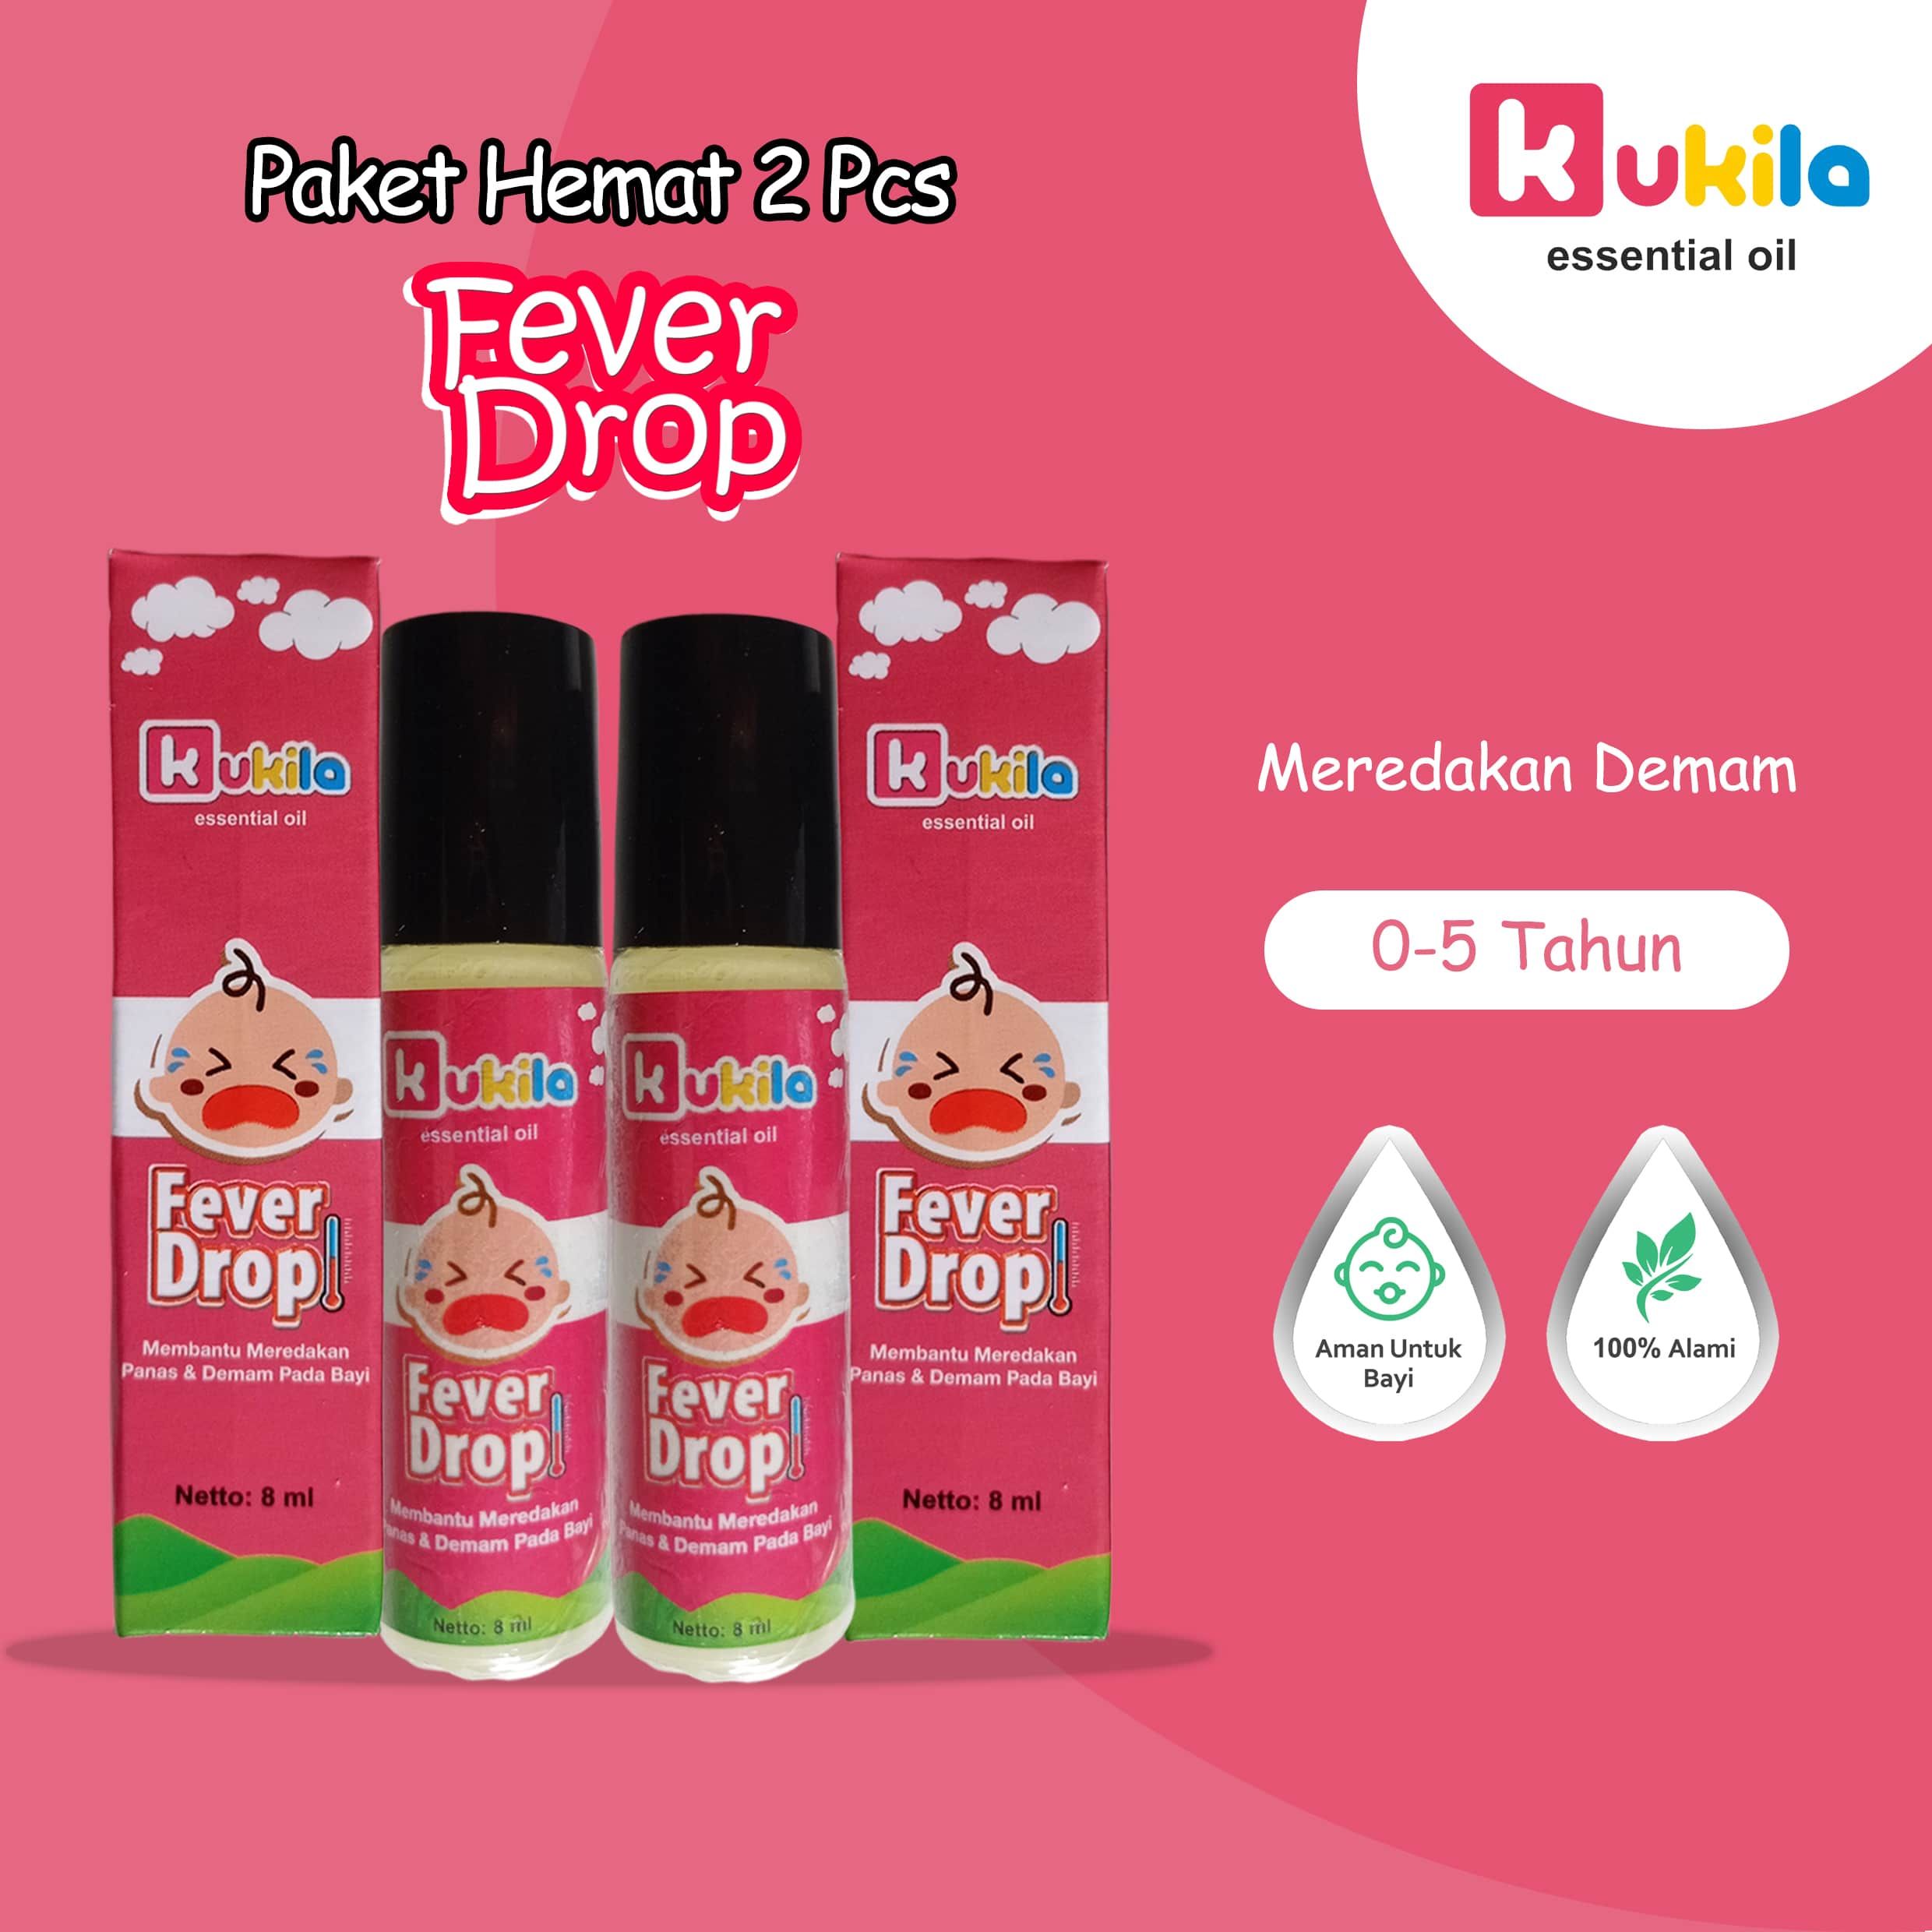 Kukila Essential Oil Baby Fever Drop 2 pcs - 1